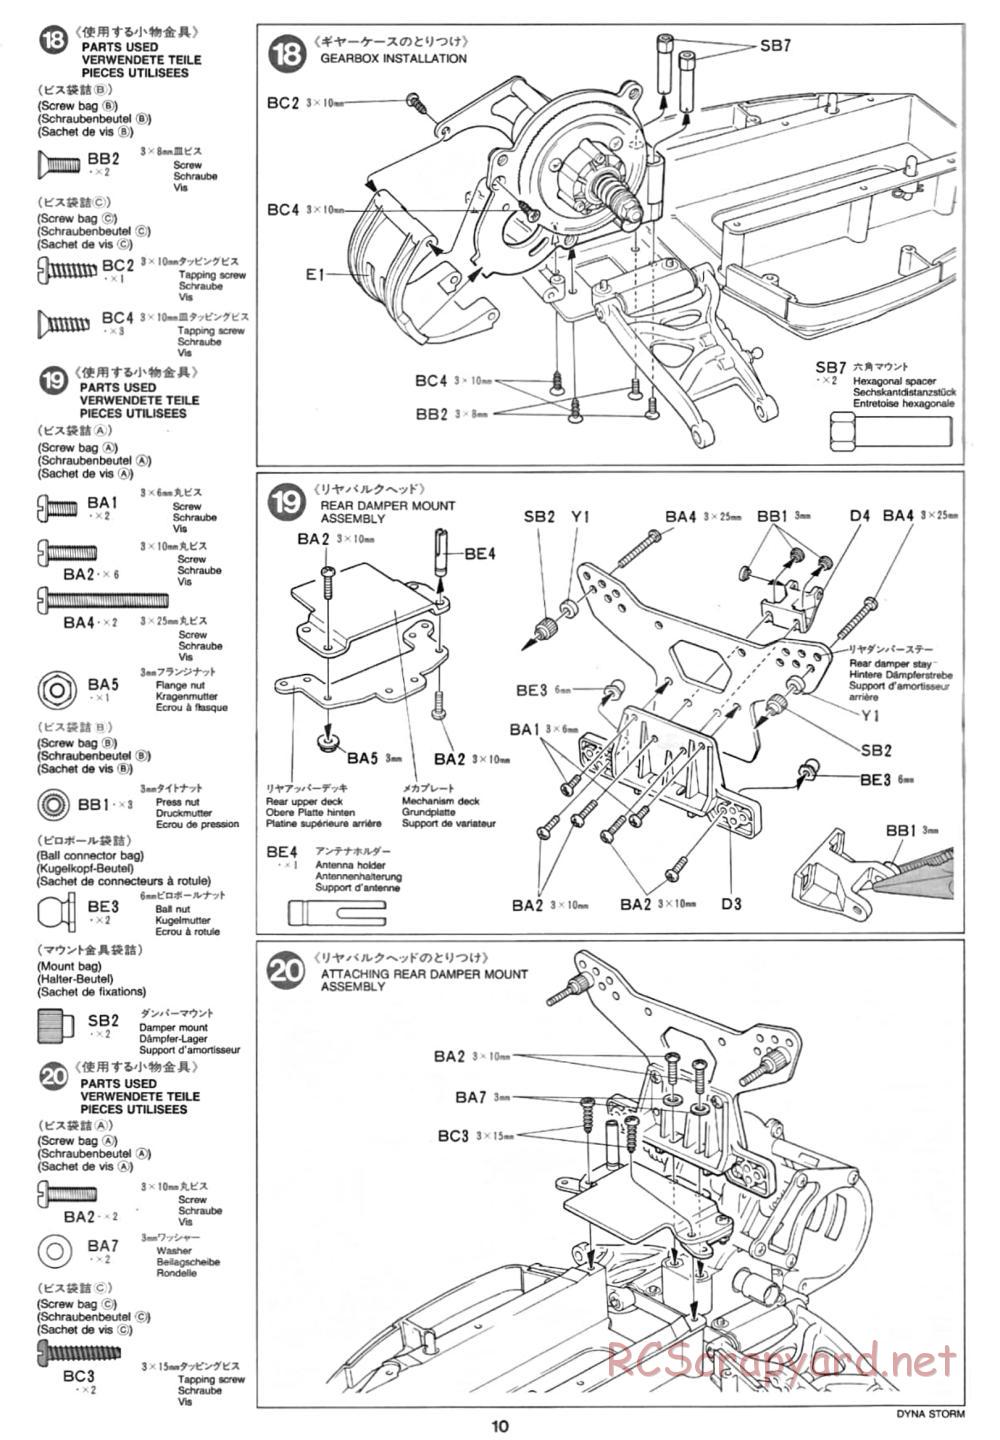 Tamiya - Dyna Storm Chassis - Manual - Page 10